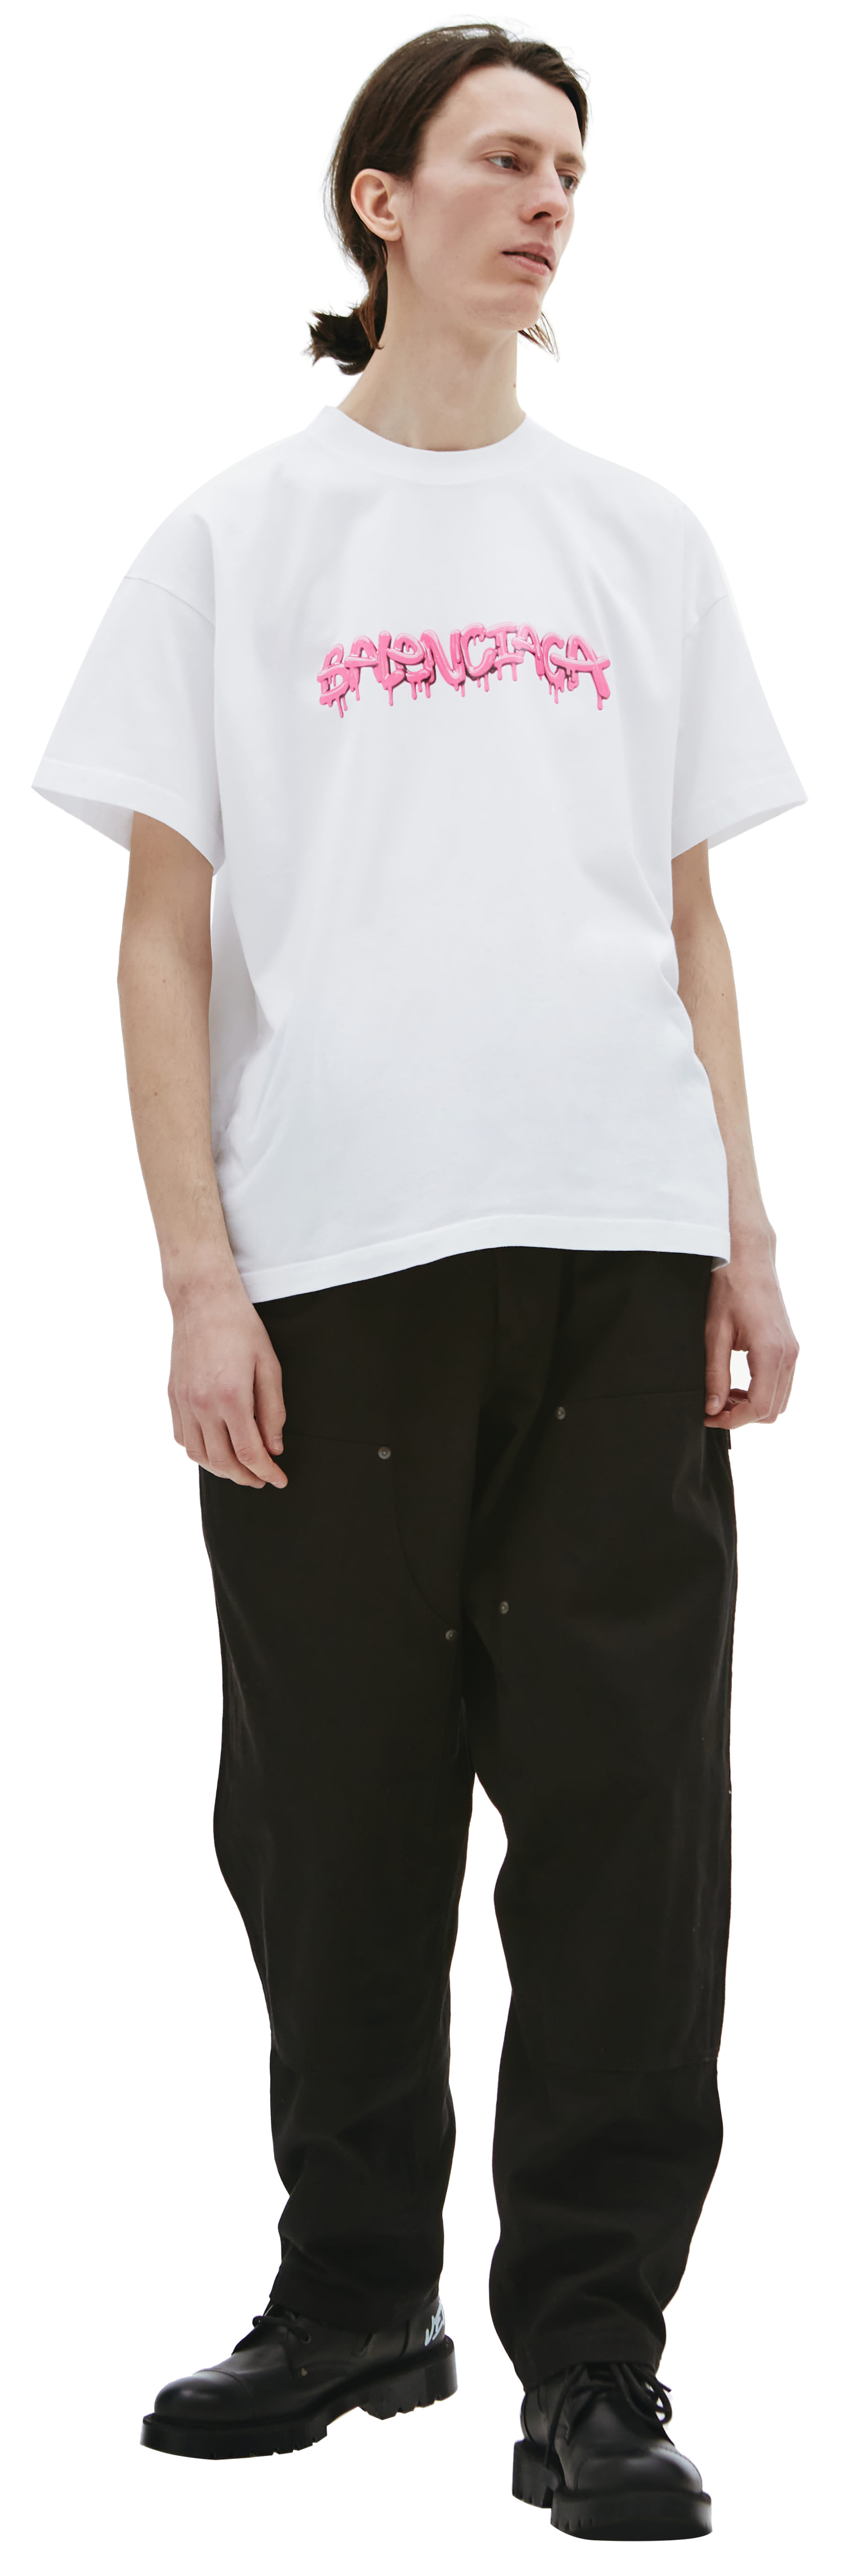 Balenciaga Slime Logo T-Shirt in white